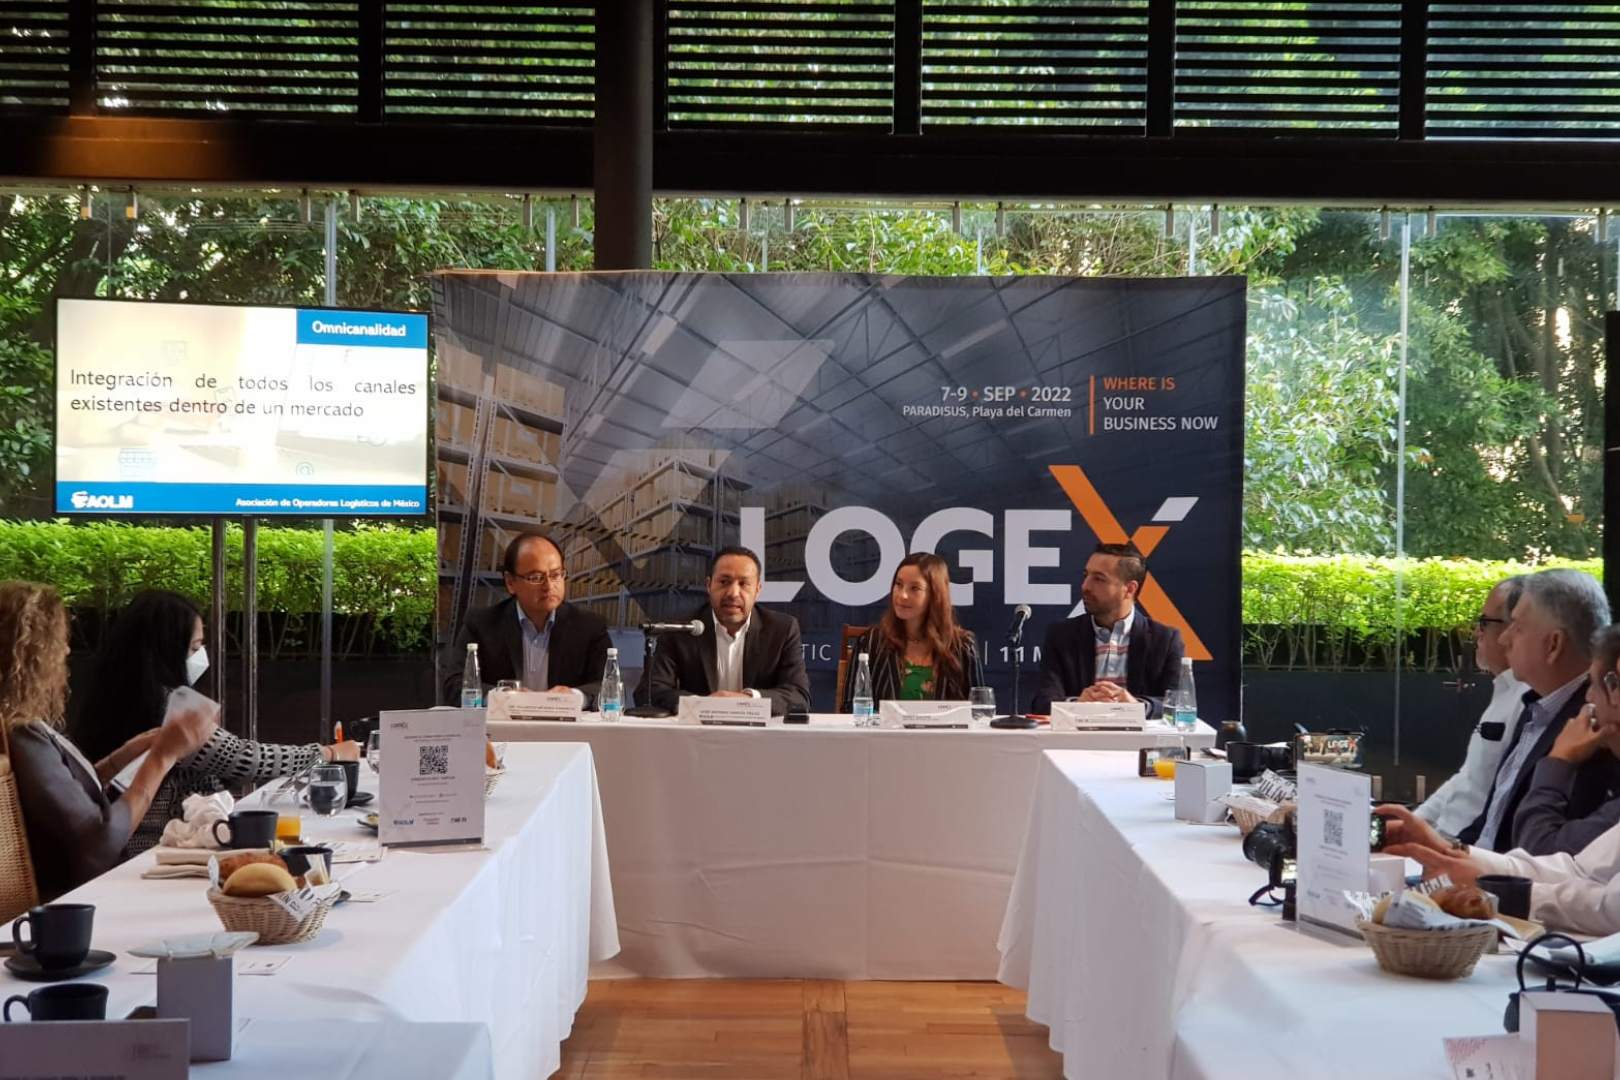 LOGEX – Logistics Experience 2022